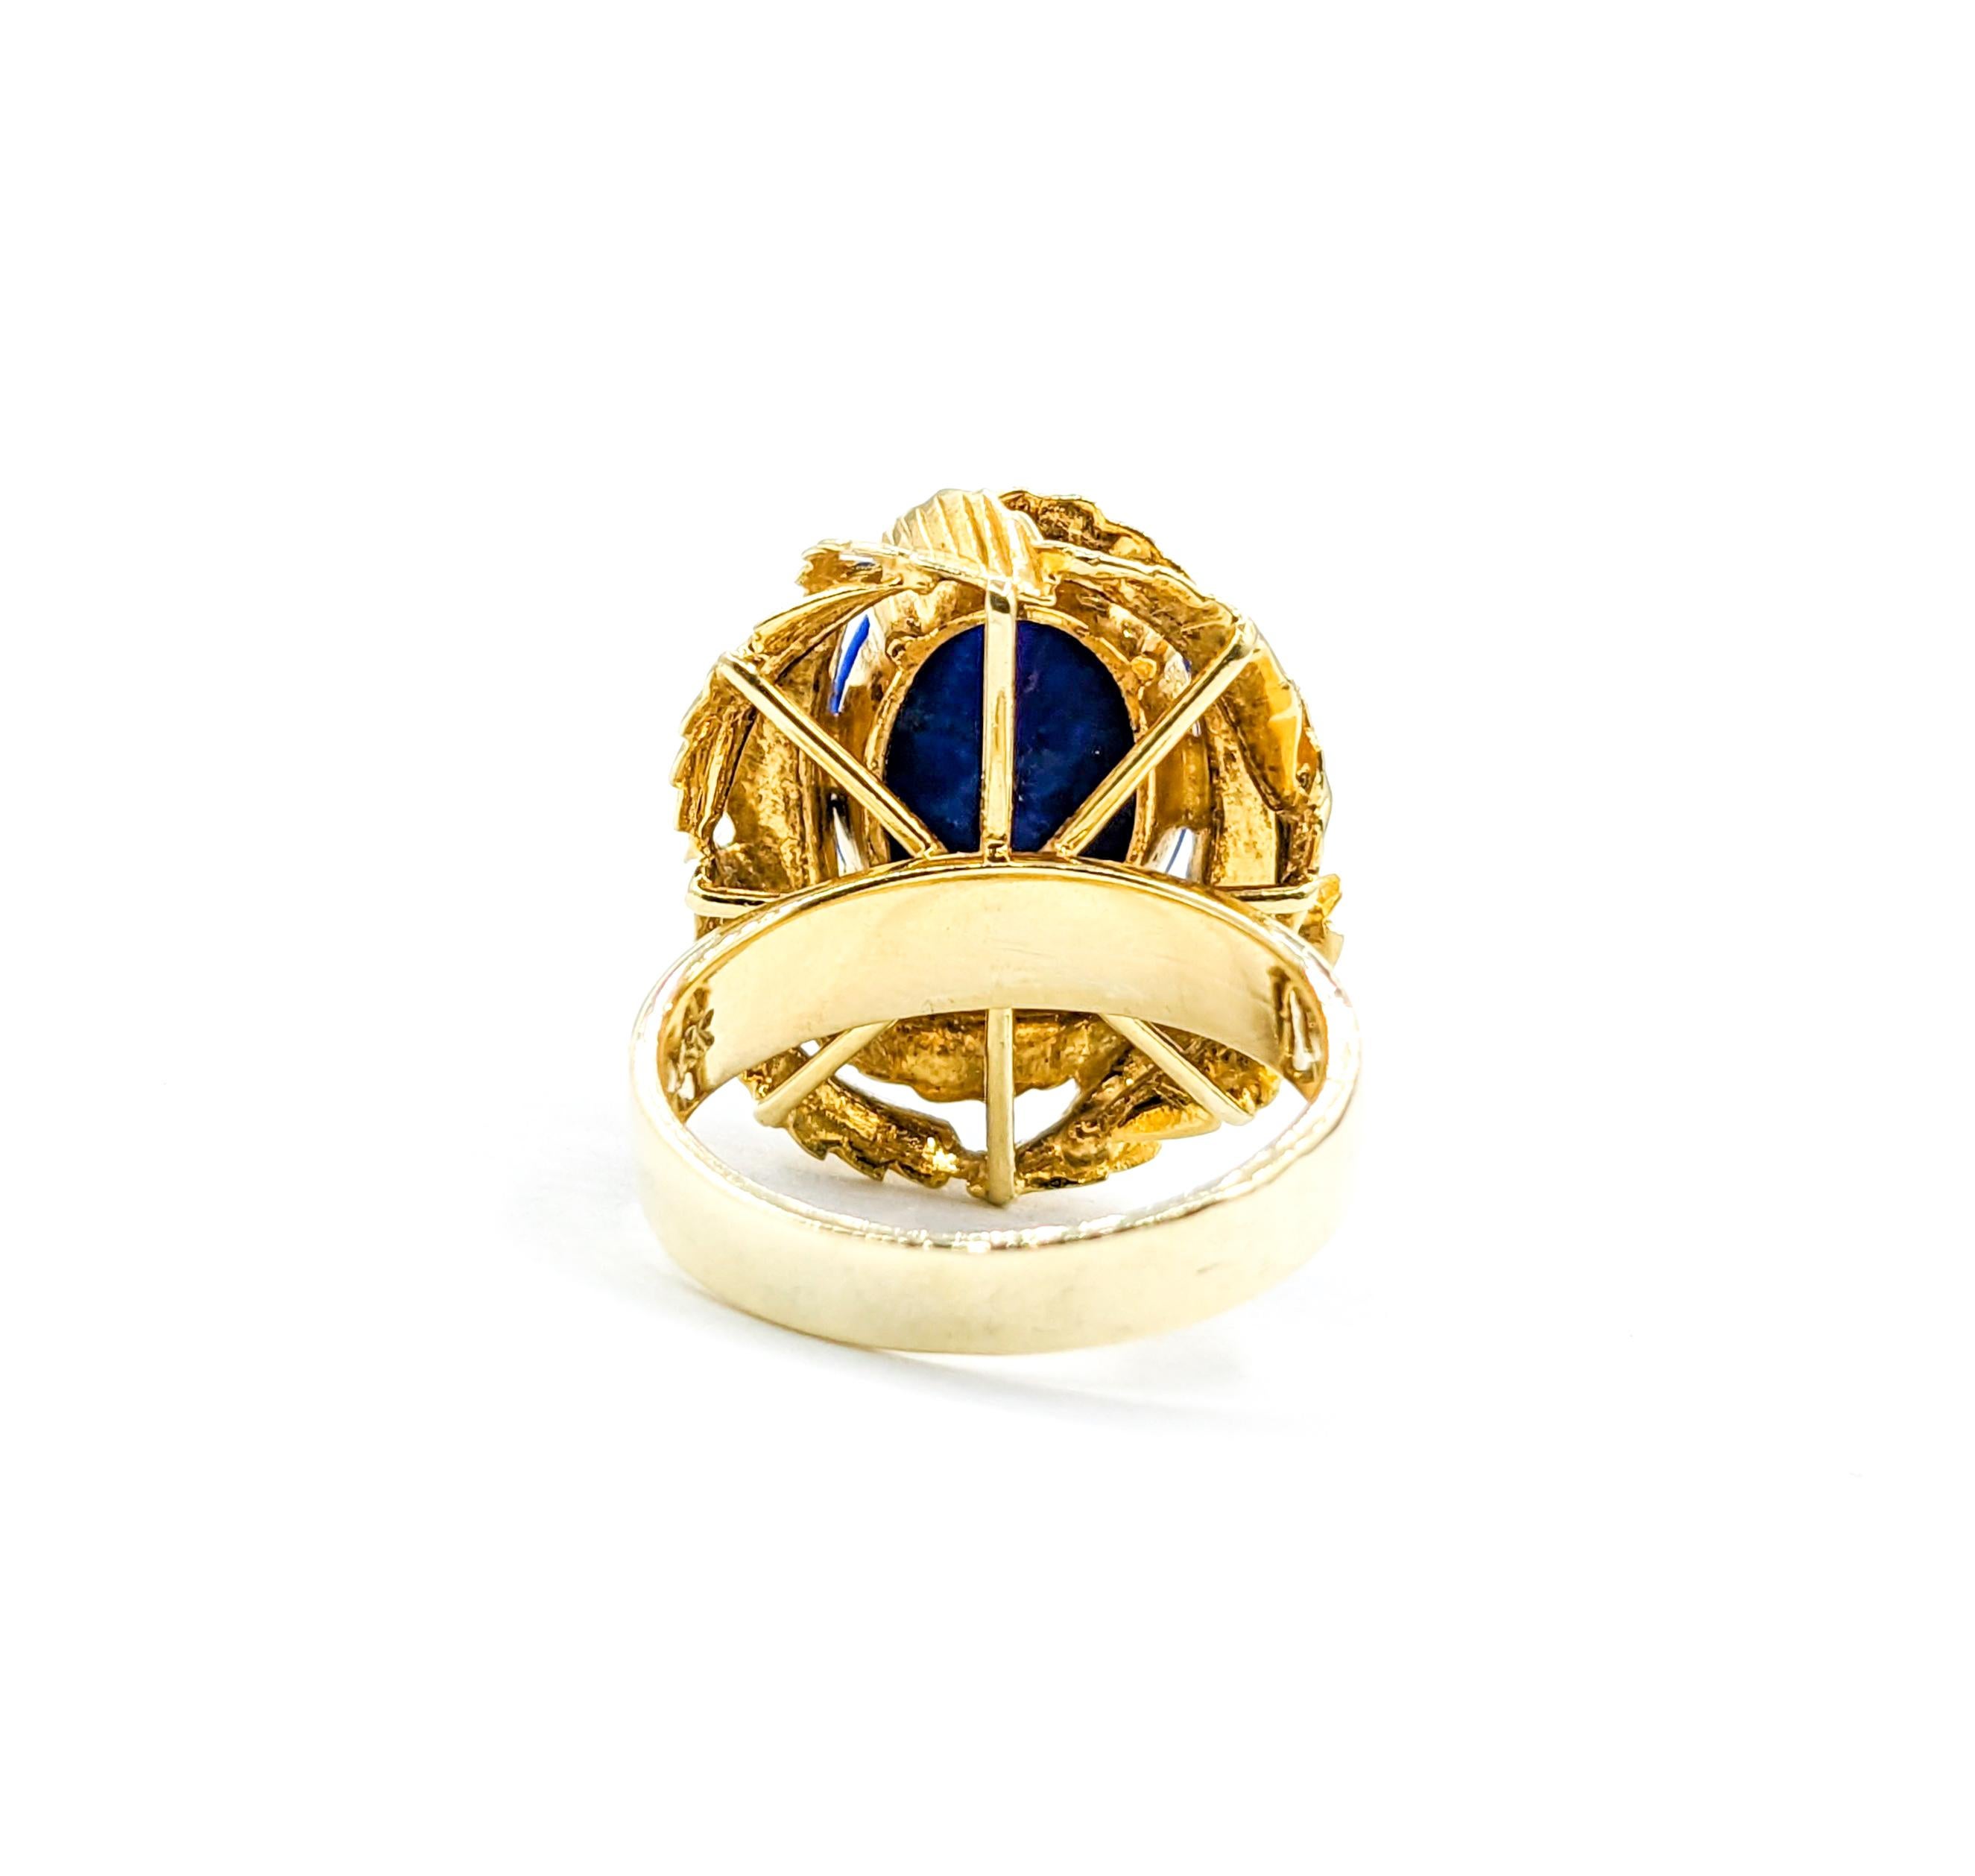  Lapis Cabochon Ring with Enamel Leaf Details For Sale 2